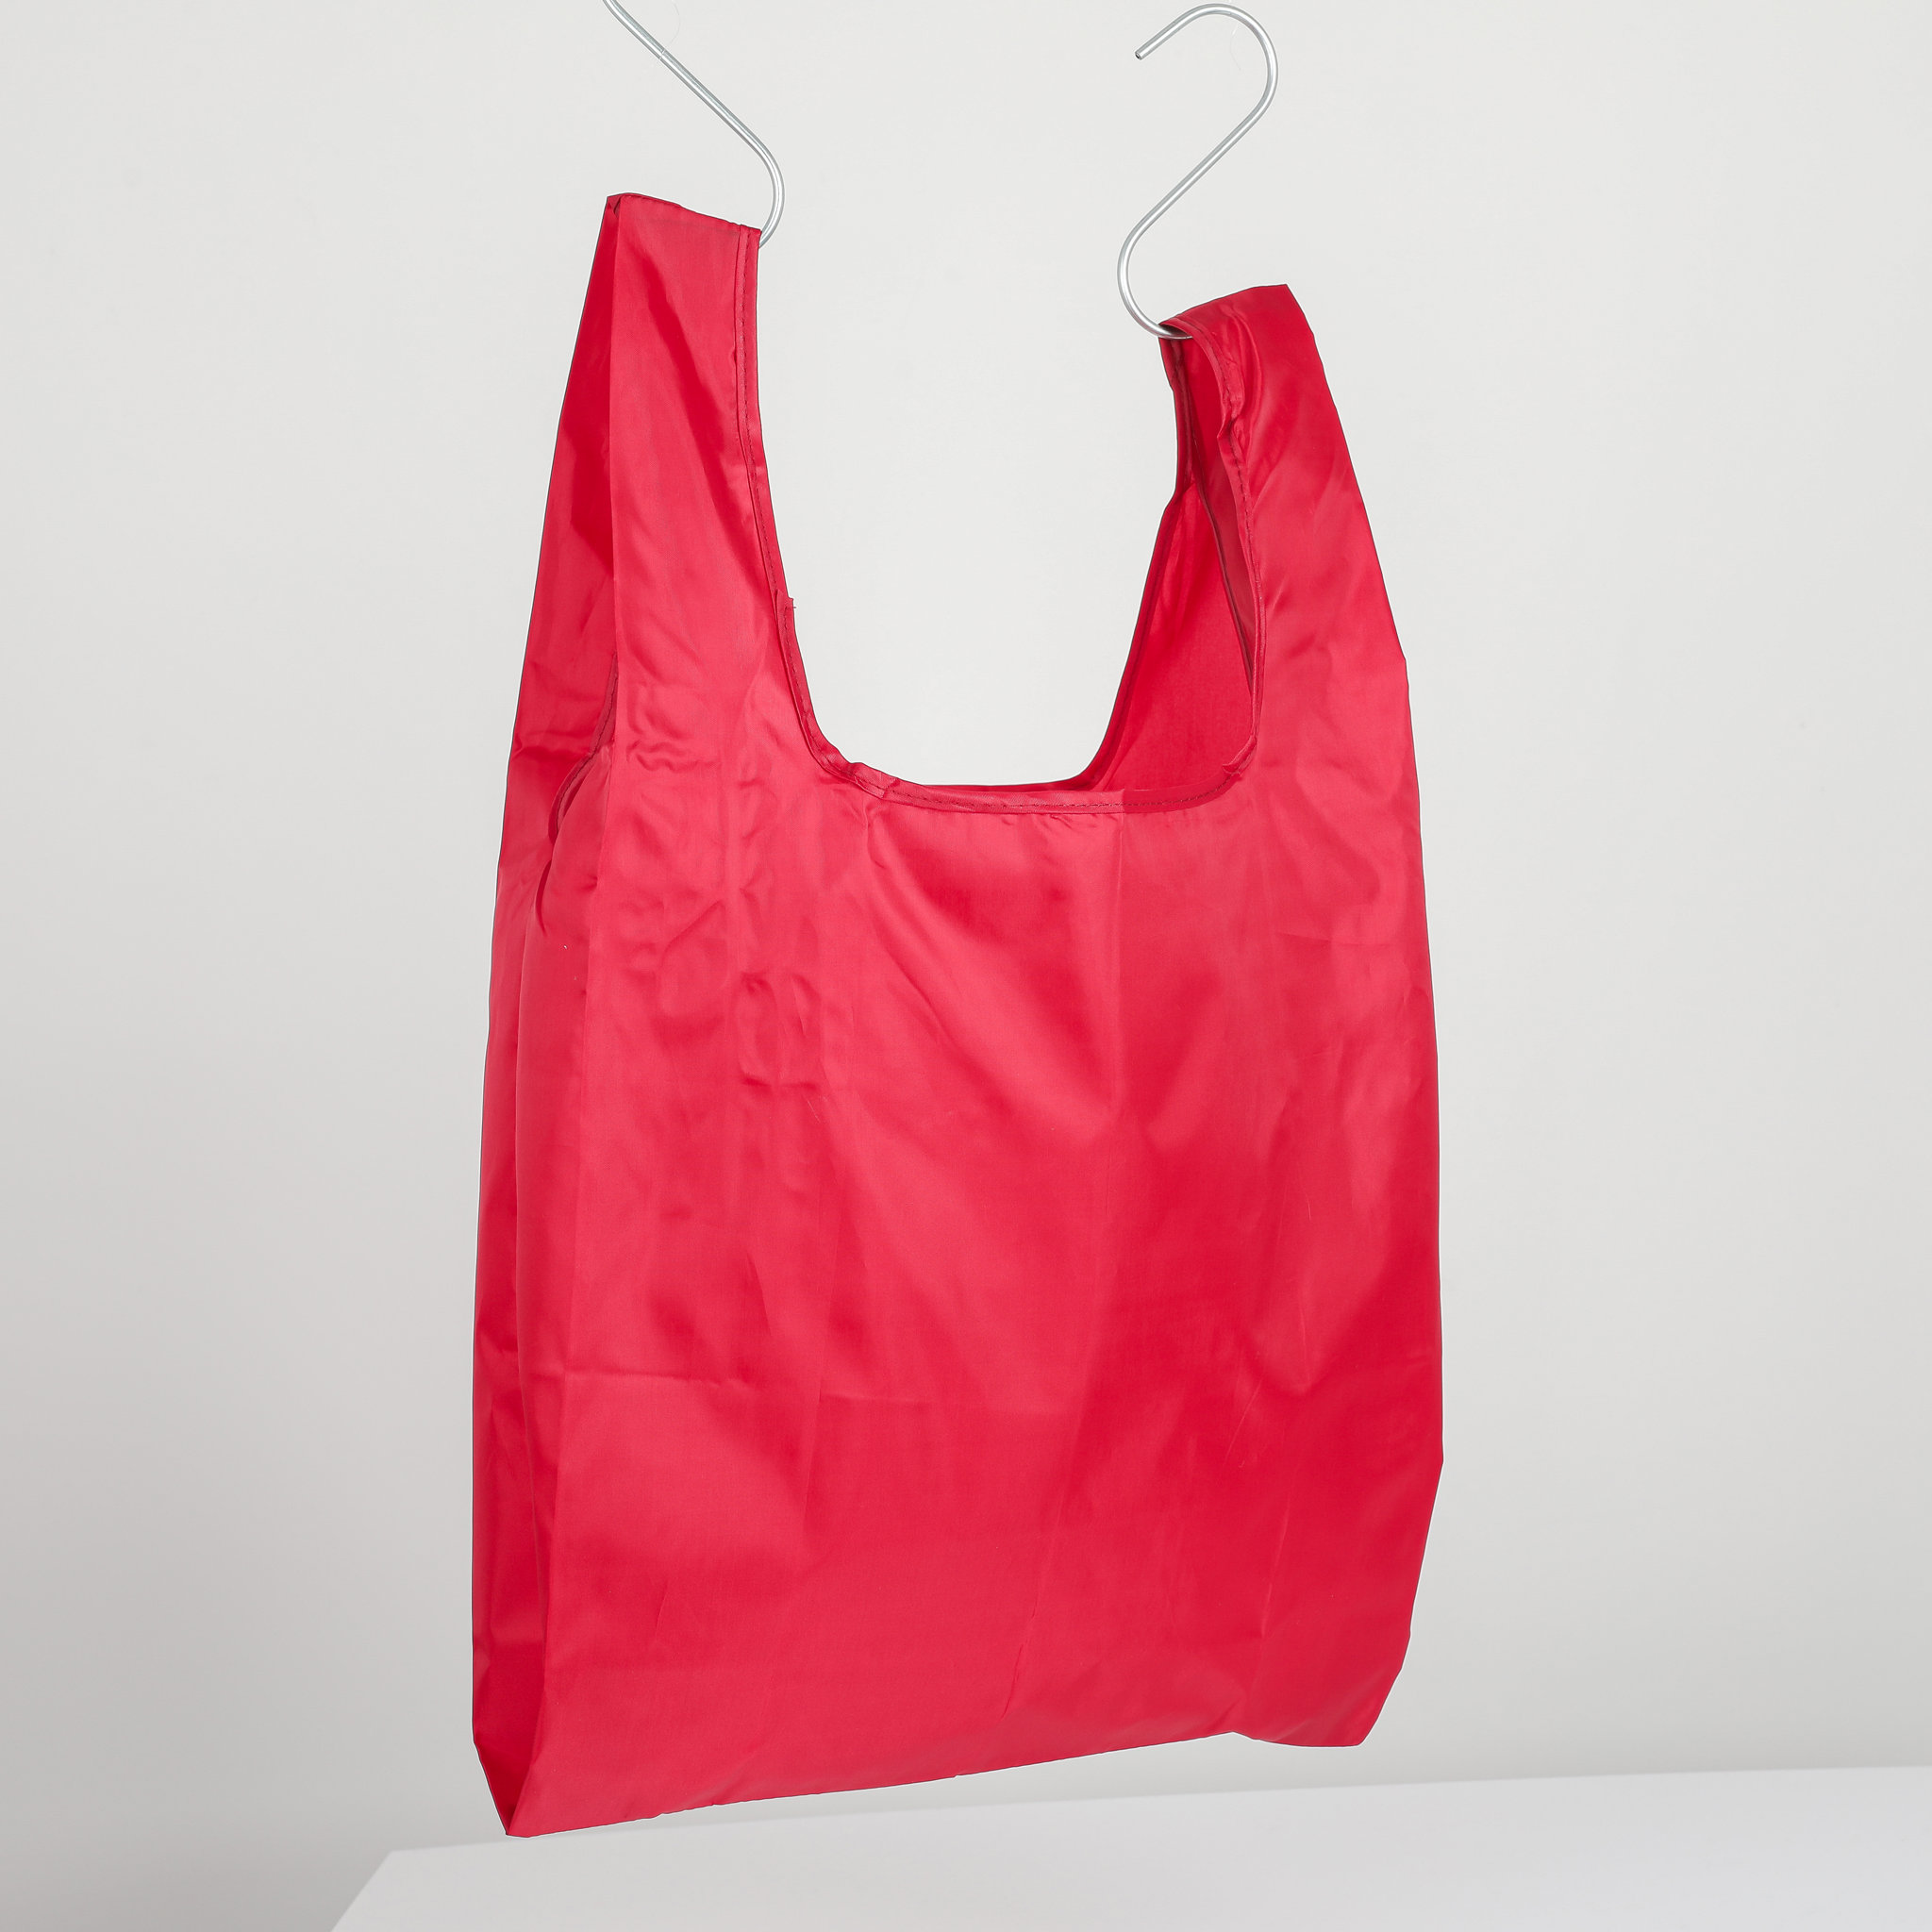 Reusable Foldable Polyester Shopping Bag4